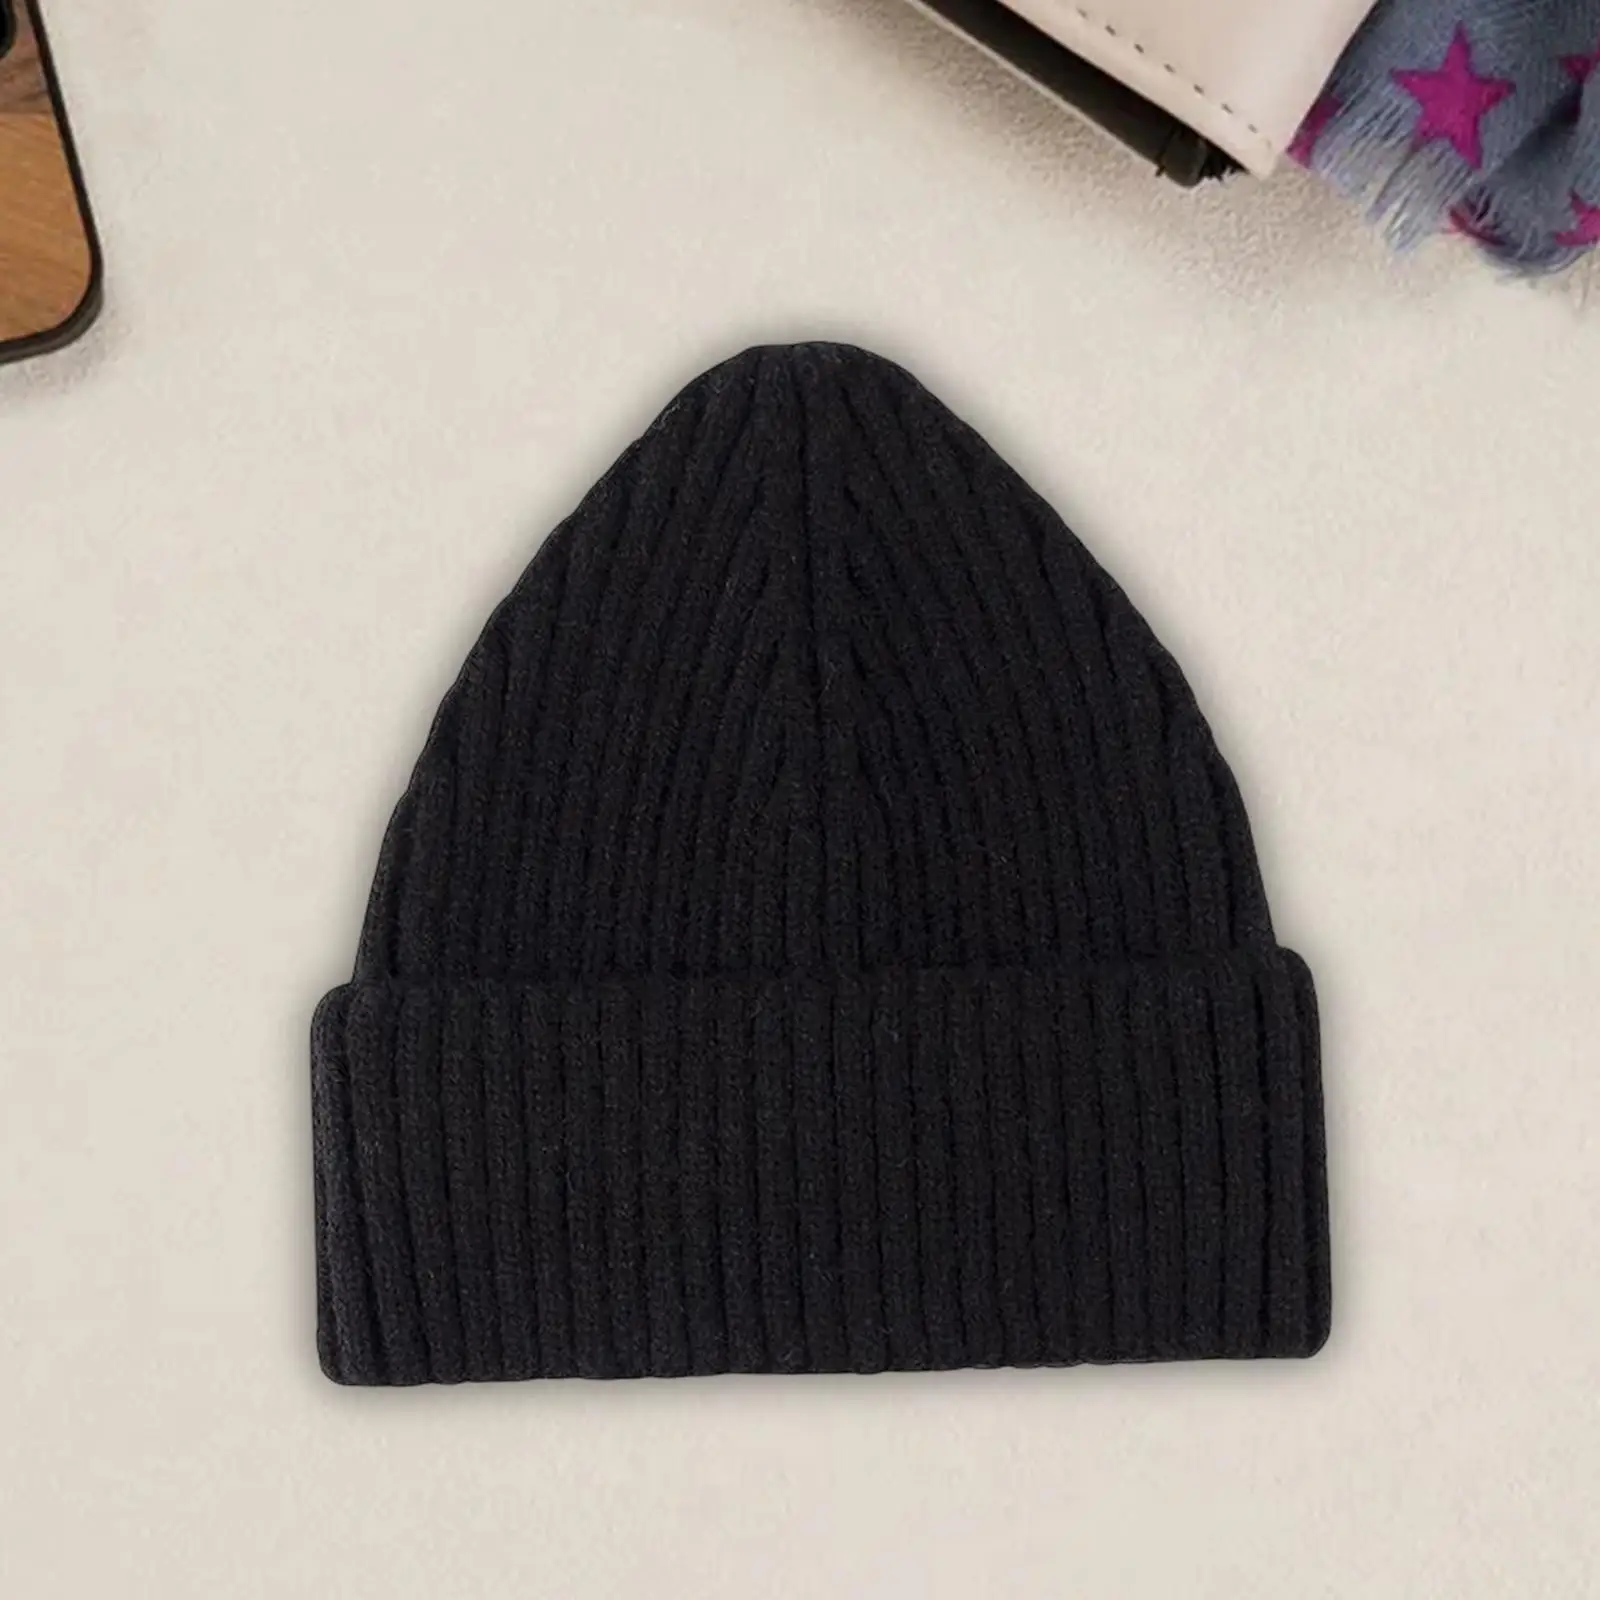 Warm Skull Caps Winter Knit Cap Clothing Headwrap for Women Climbing Outdoor